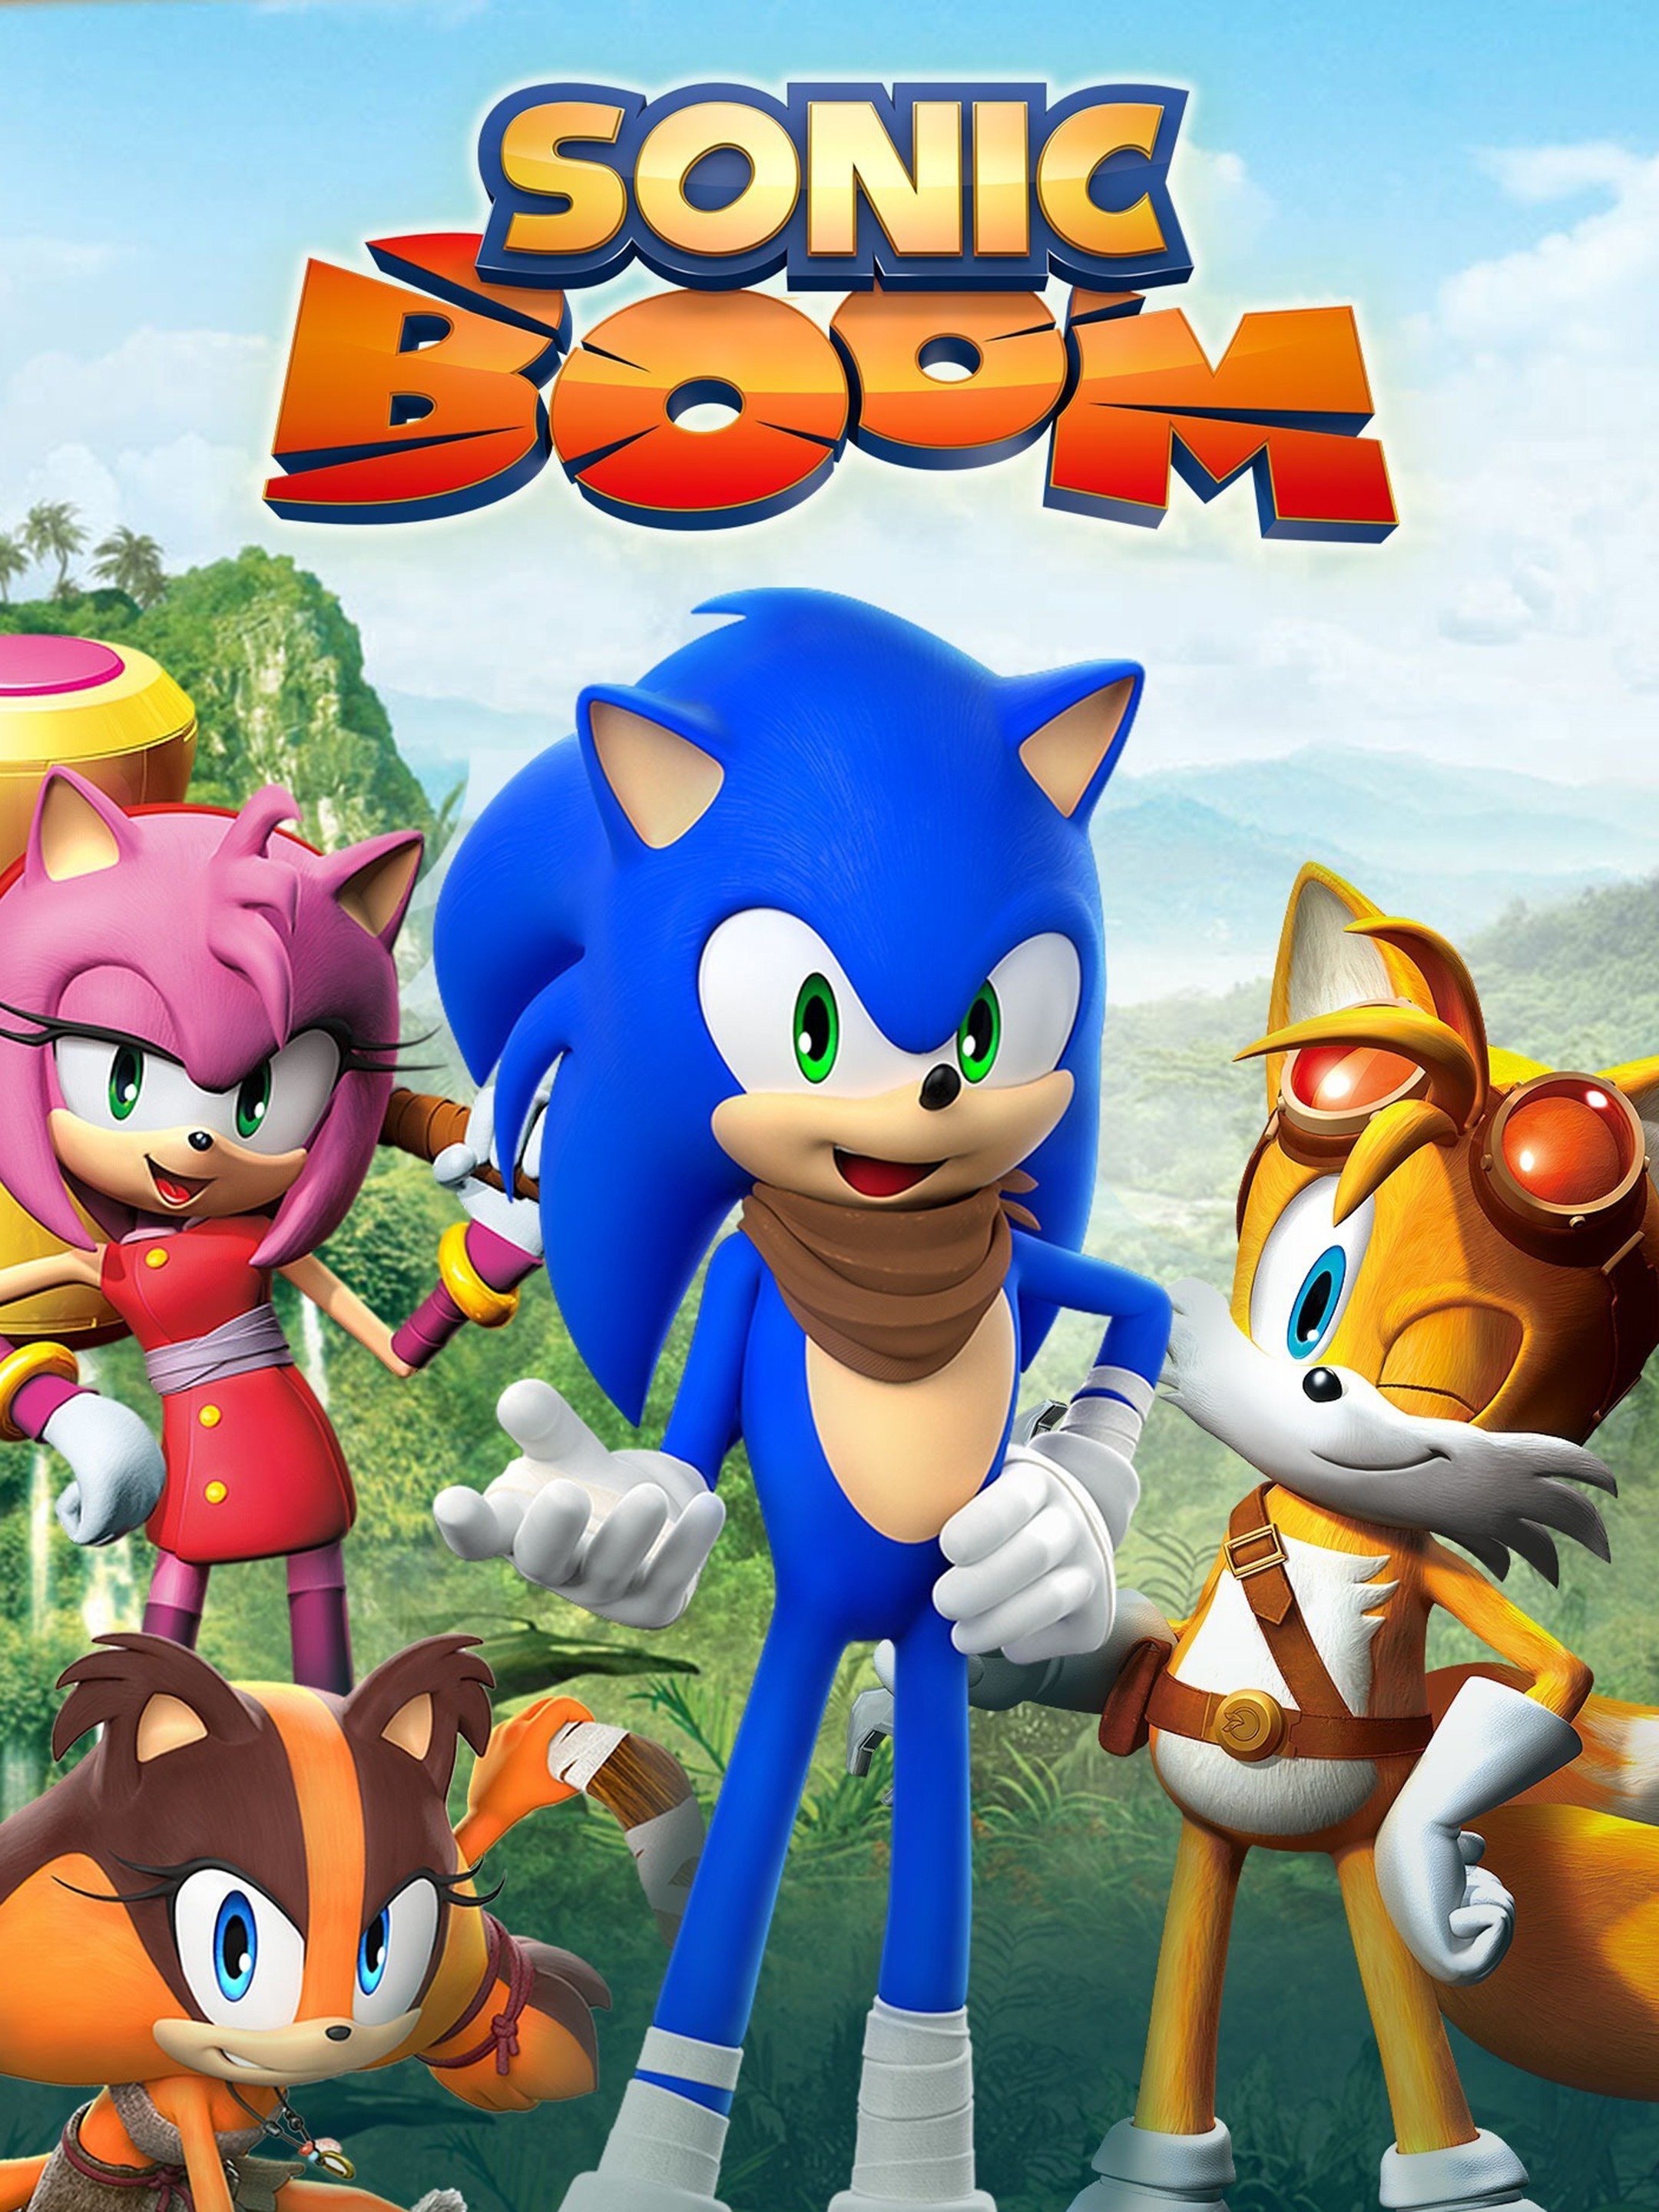 Sonic boom tv show